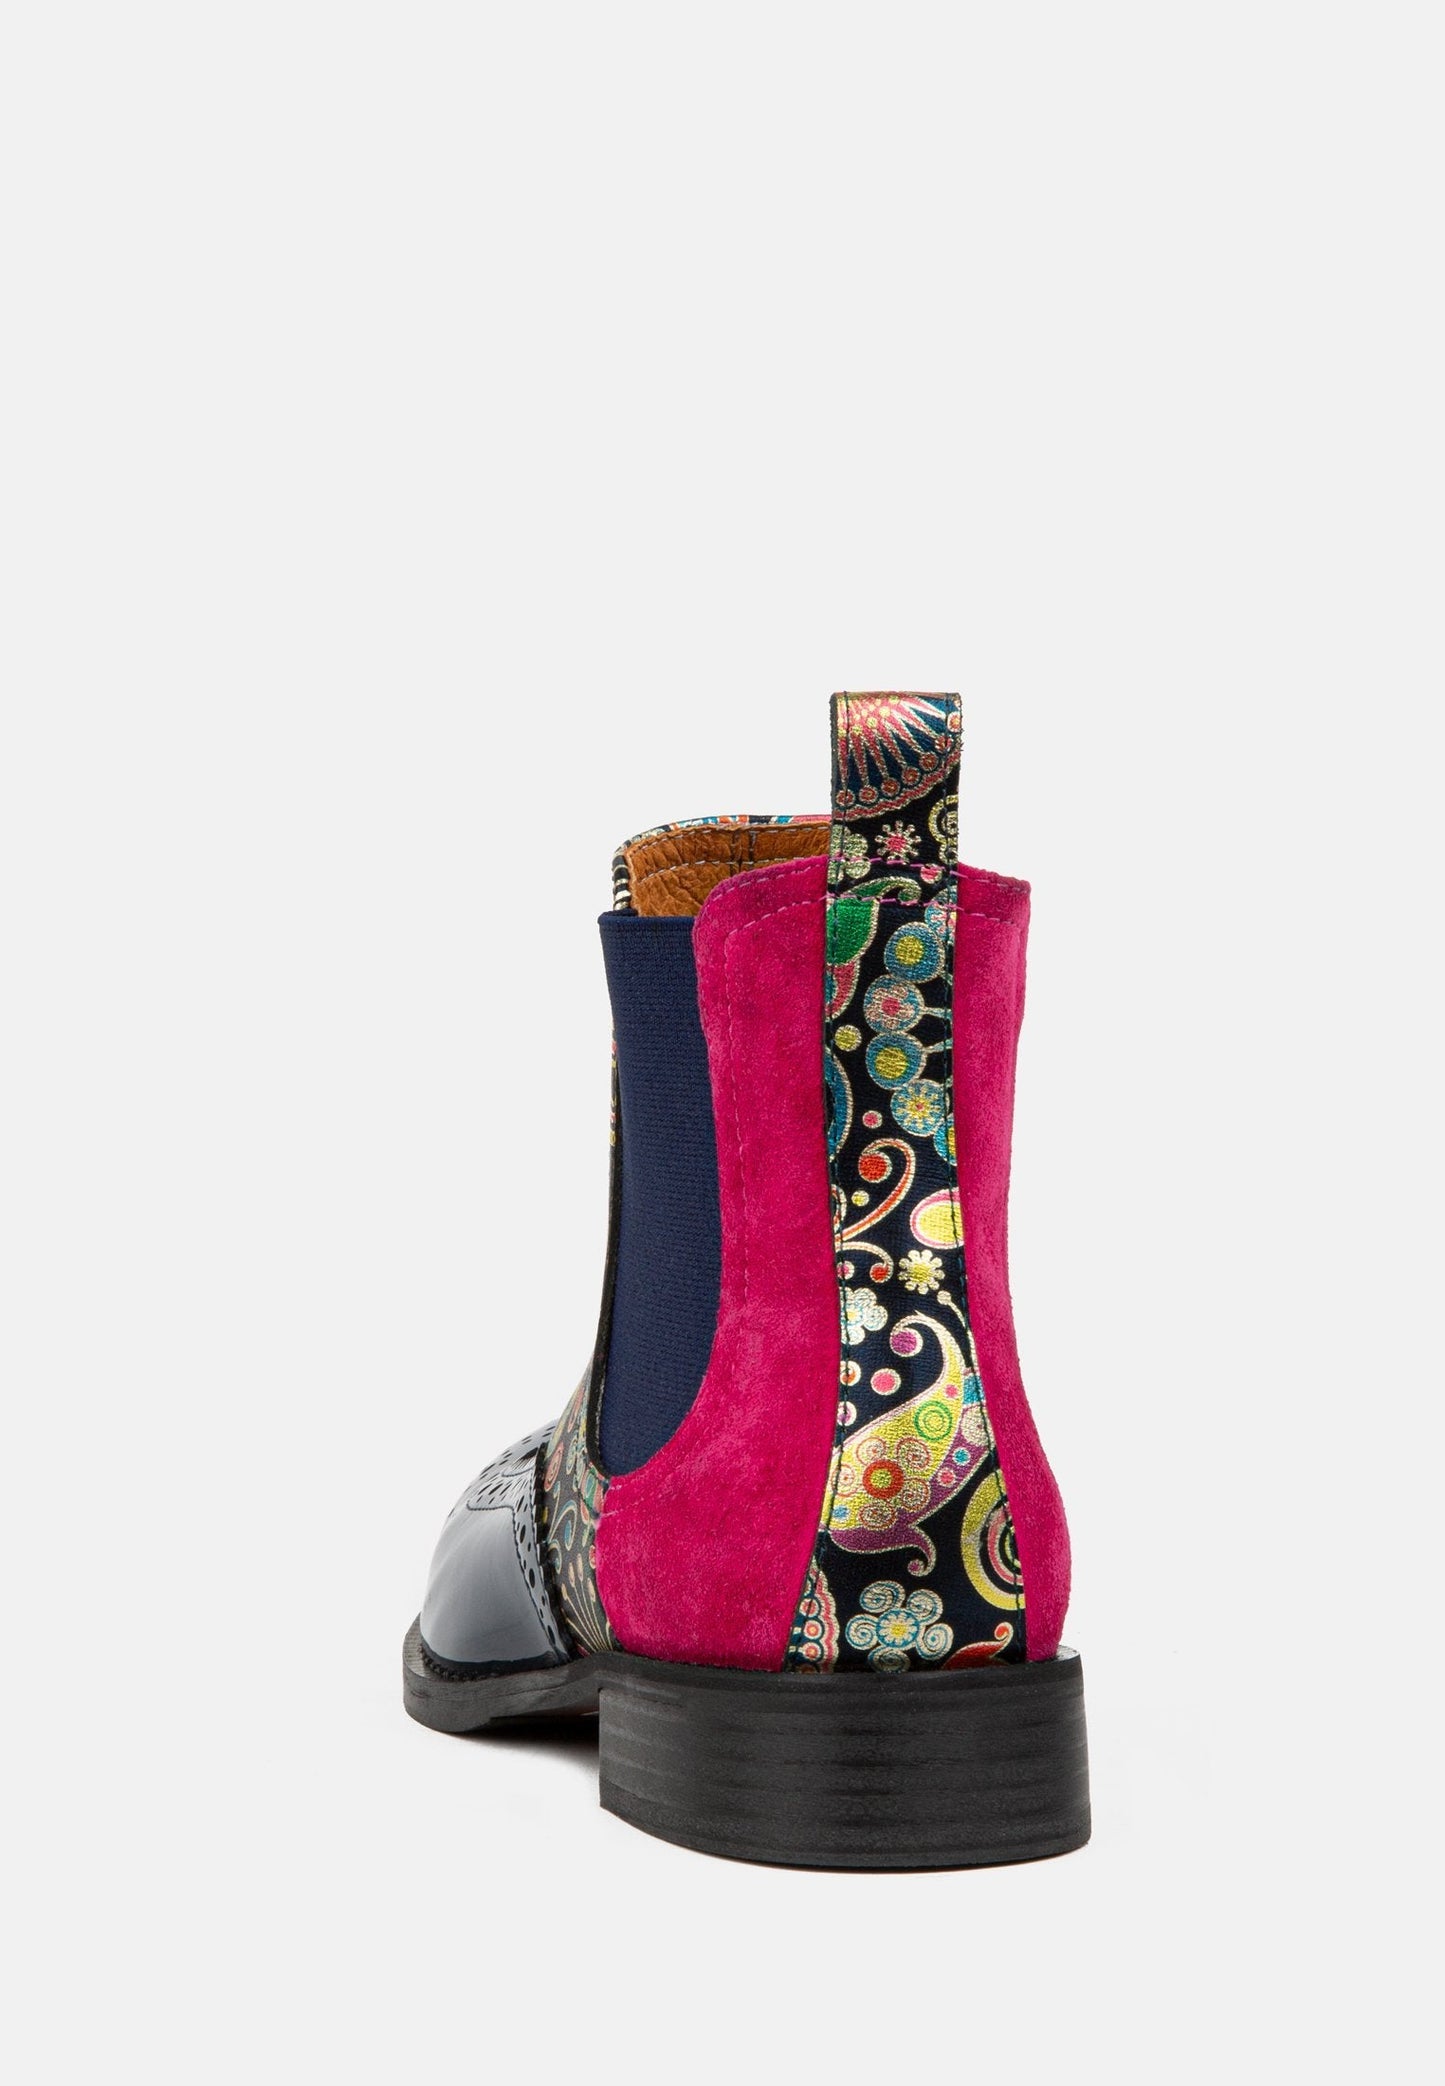 Mamacita - Navy & Pink Ankle Boots Embassy London 